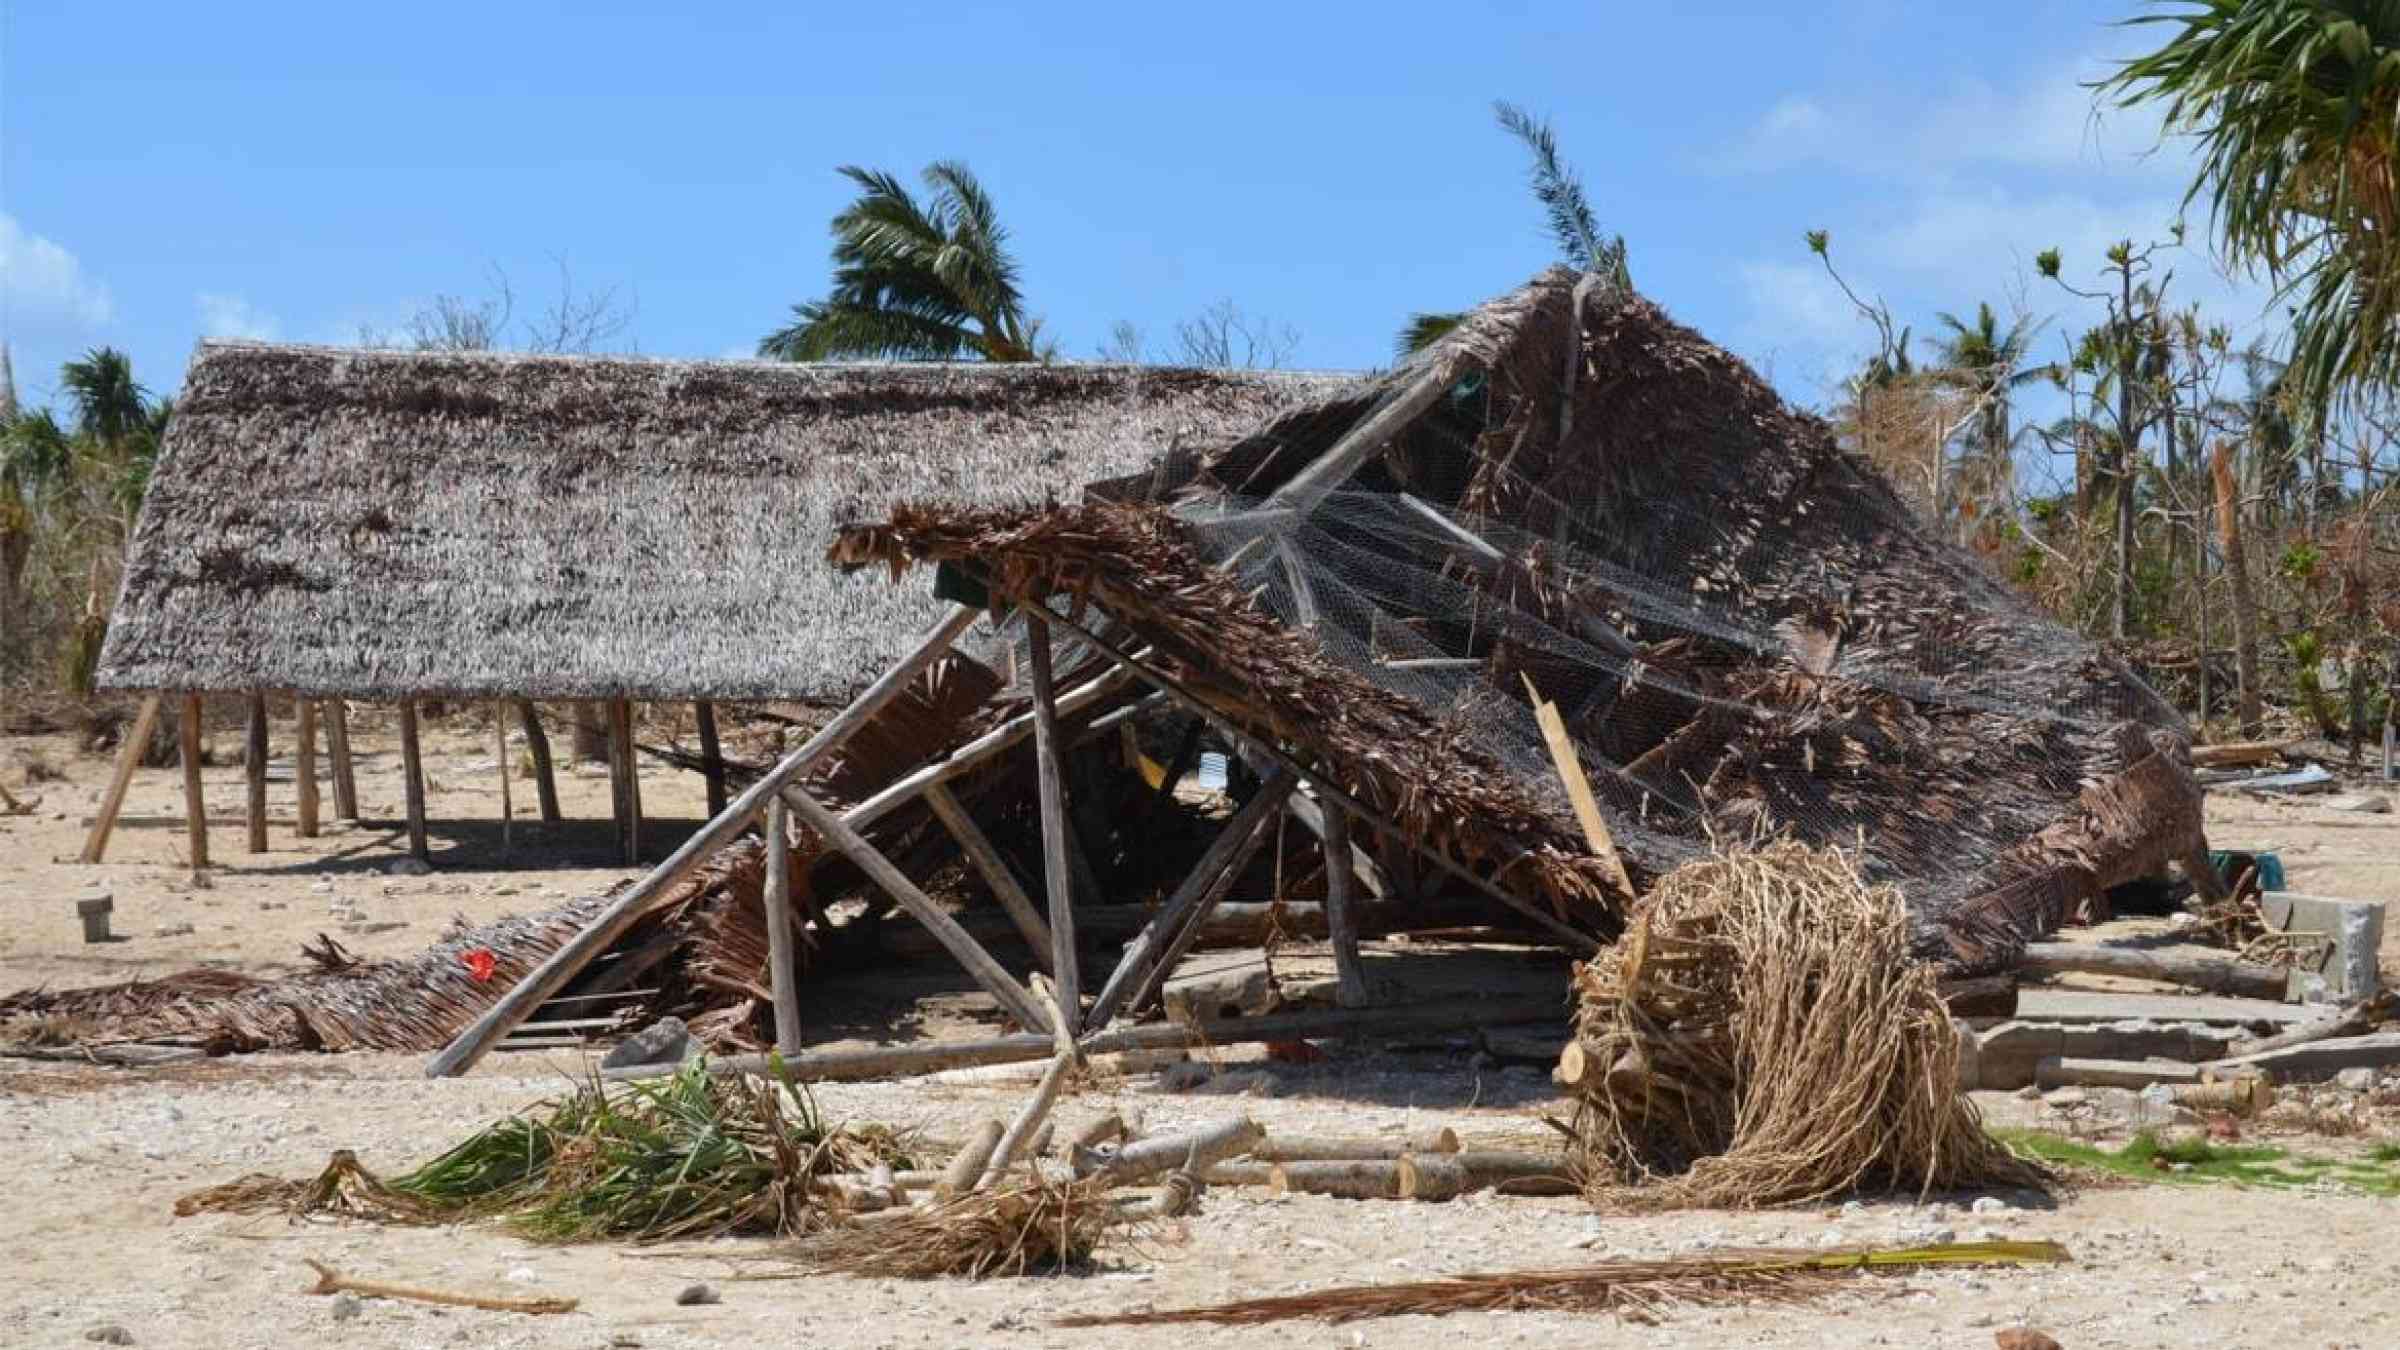 A hut lies toppled after a cyclone hit Vanuatu